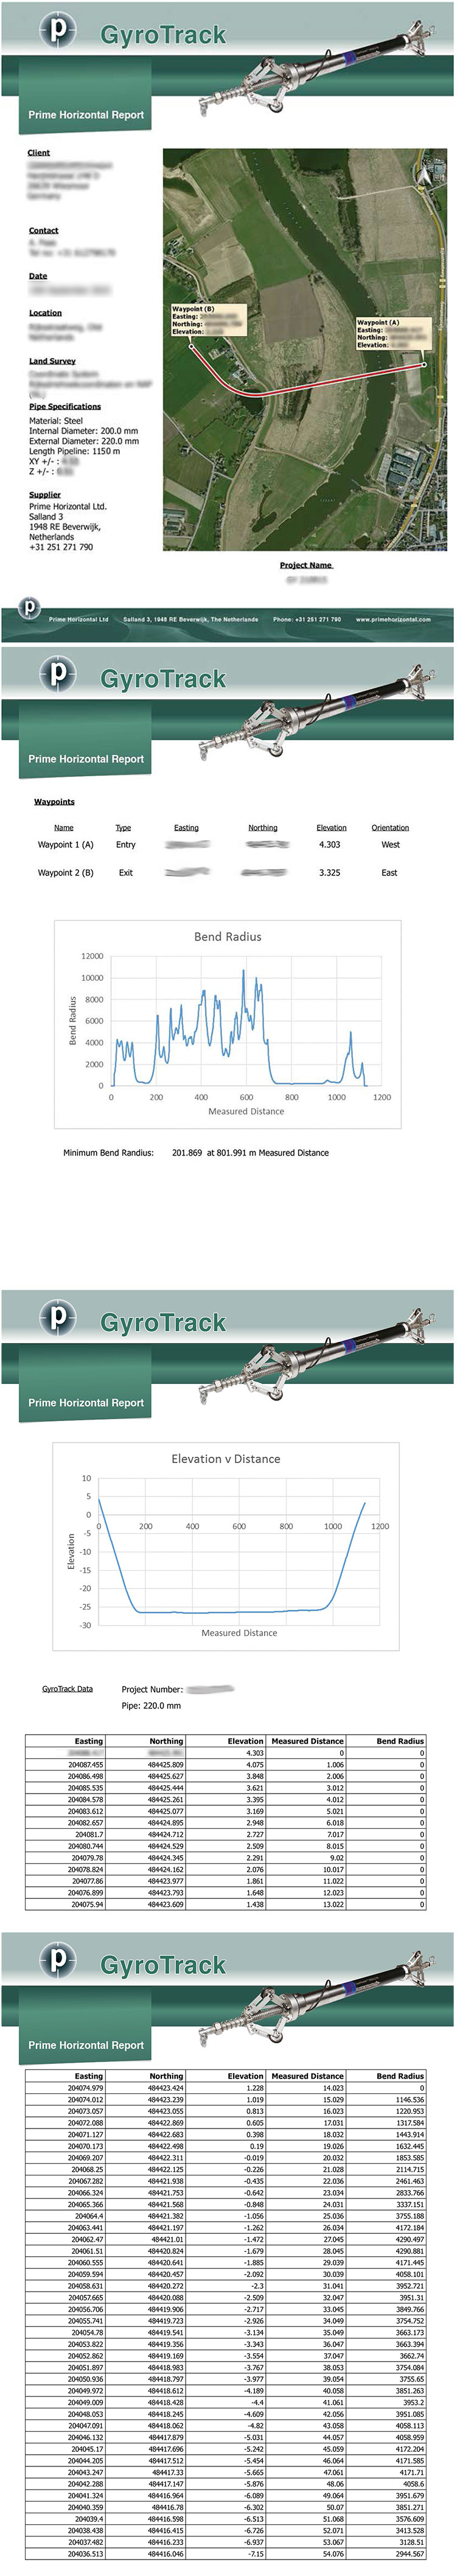 Gyro_report_sample